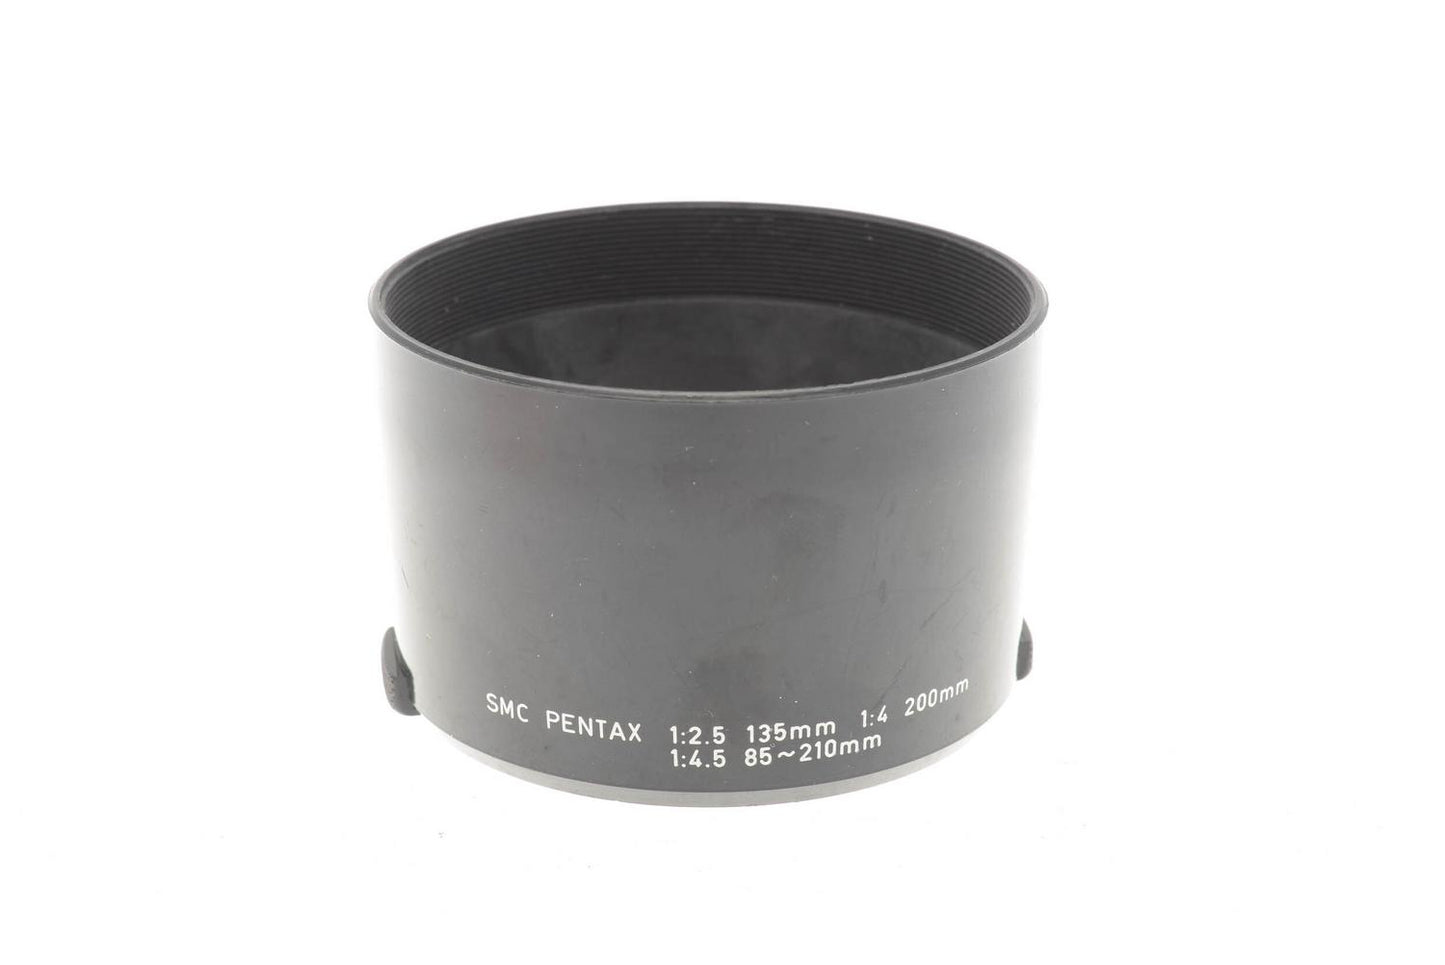 Pentax 58mm Lens Hood for SMC Pentax 135mm f2.5 / 200mm f4 / 85-210mm f4.5 - Accessory